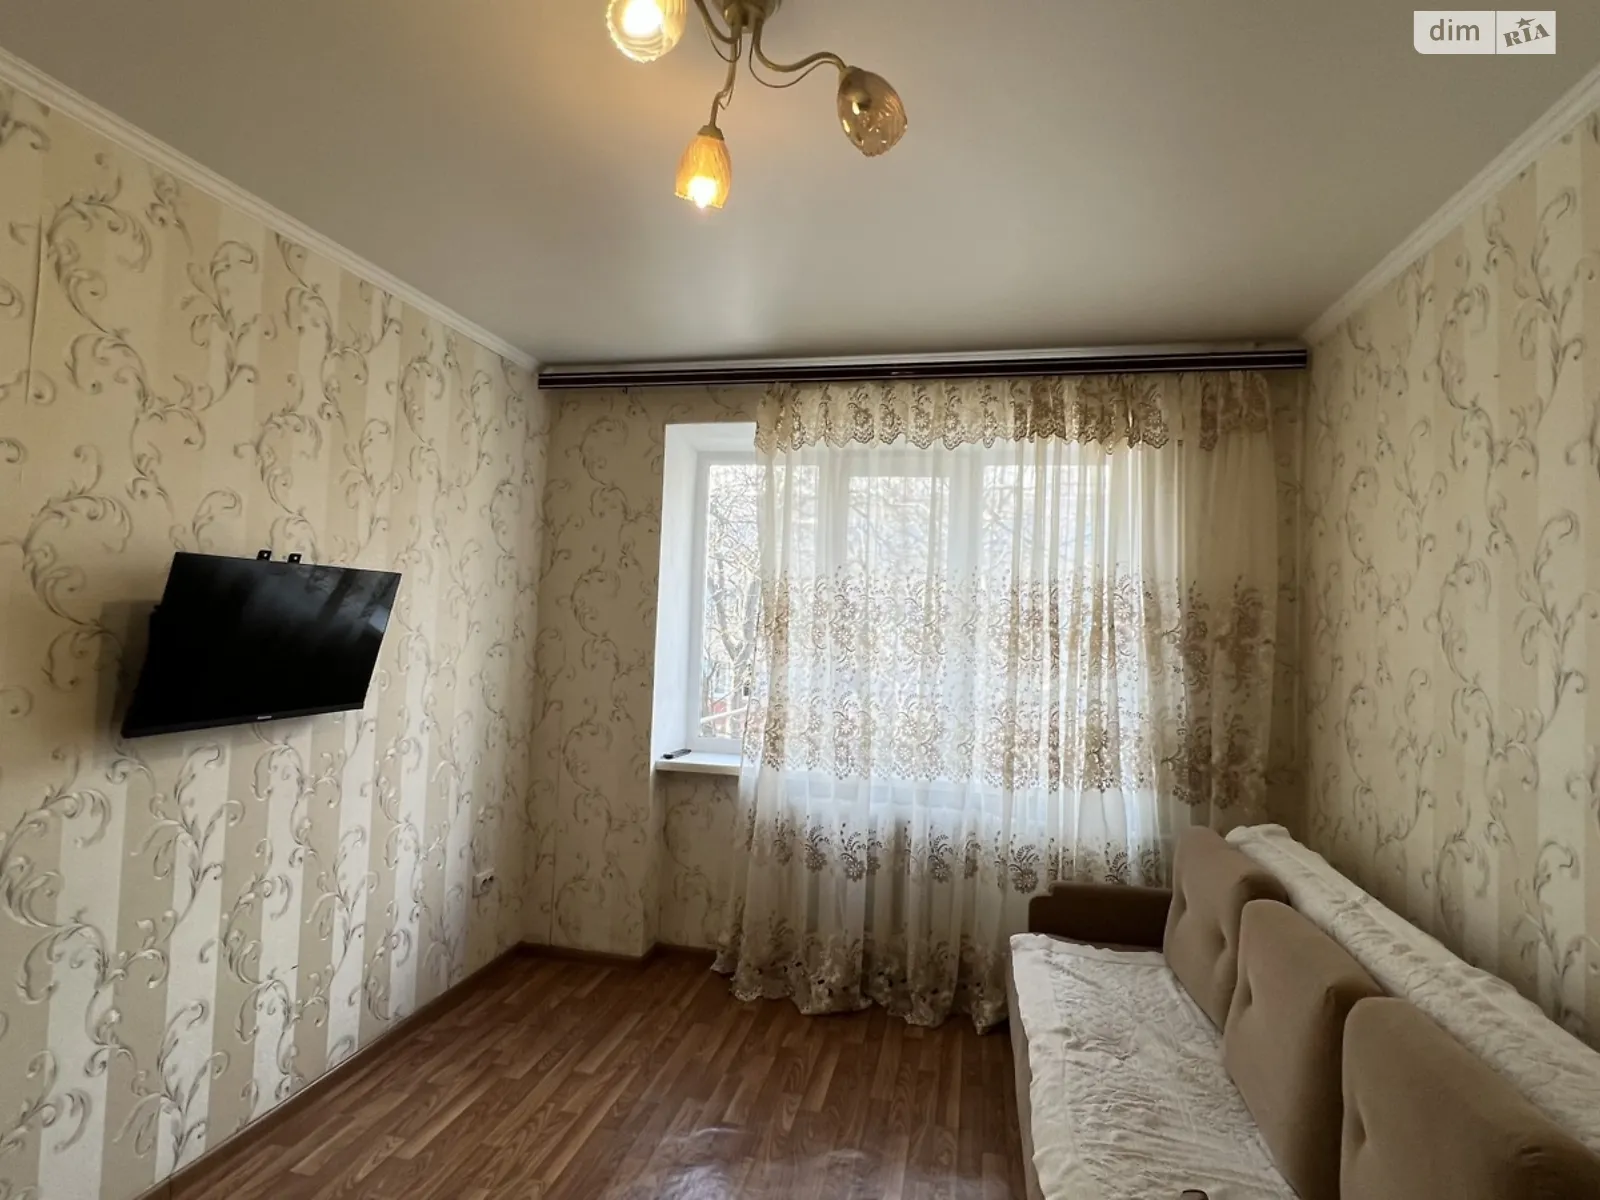 Продается комната 21 кв. м в Одессе, цена: 9999 $ - фото 1